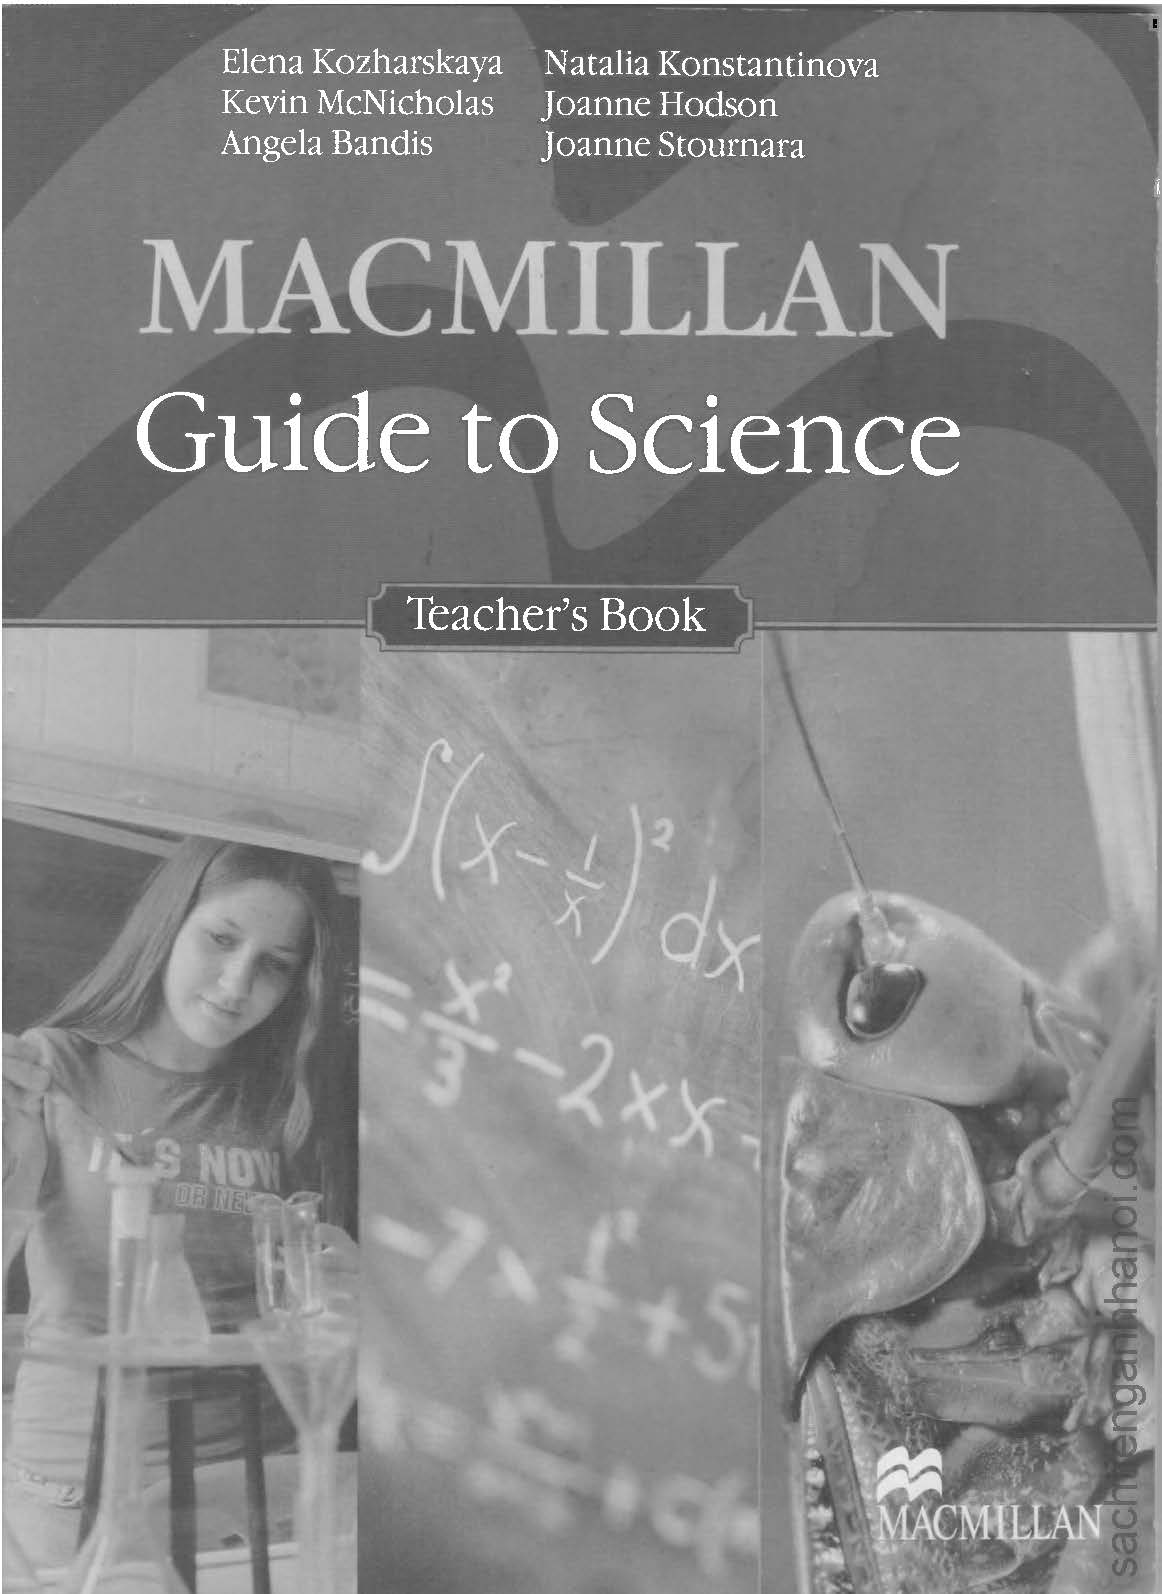 Kevin McNicholas, Joanne Stournara, Elena Kozharskaya, Angela Bandis, Natalia Konstantinova, Joanne Hodson. Macmillan Guide To Science. Teacher's Book 